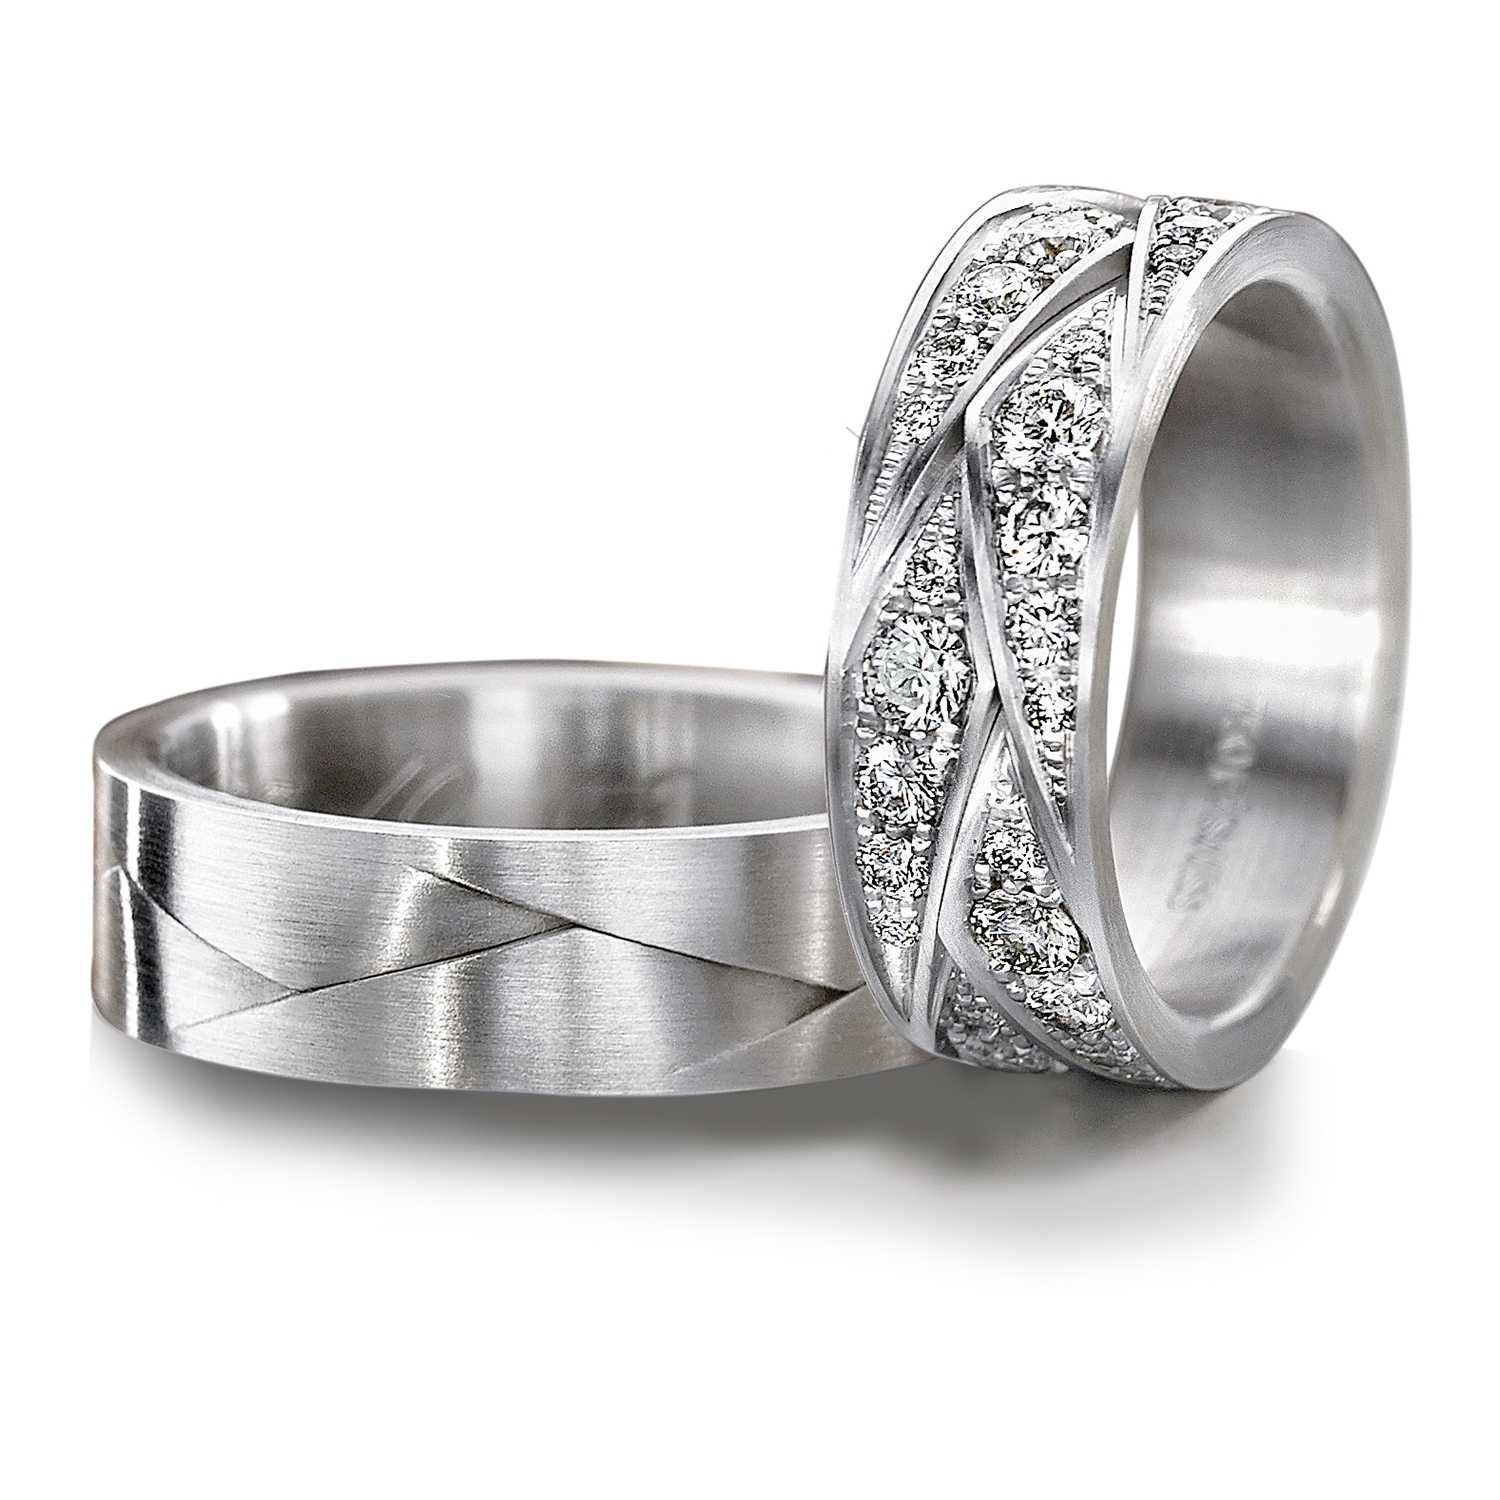 Diamond rings in gold, platinum and palladium with diamonds Furrer Jacot Origami